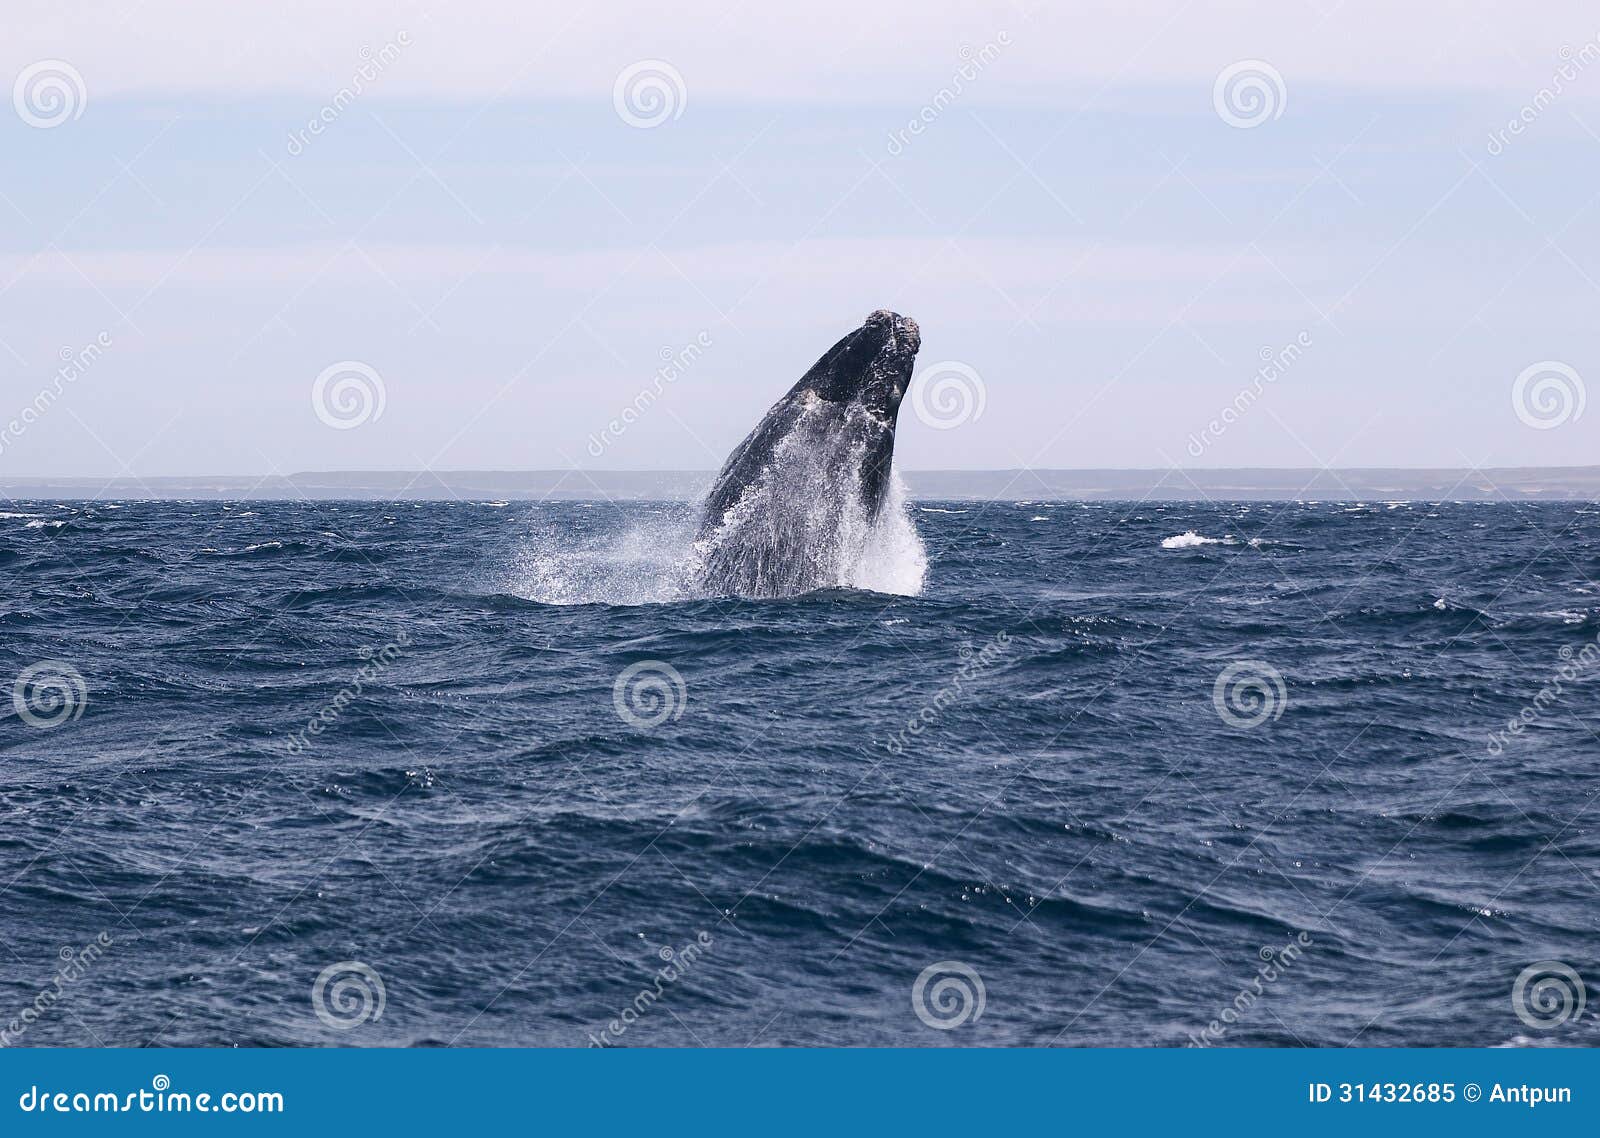 whale cetacean eubalaena australis